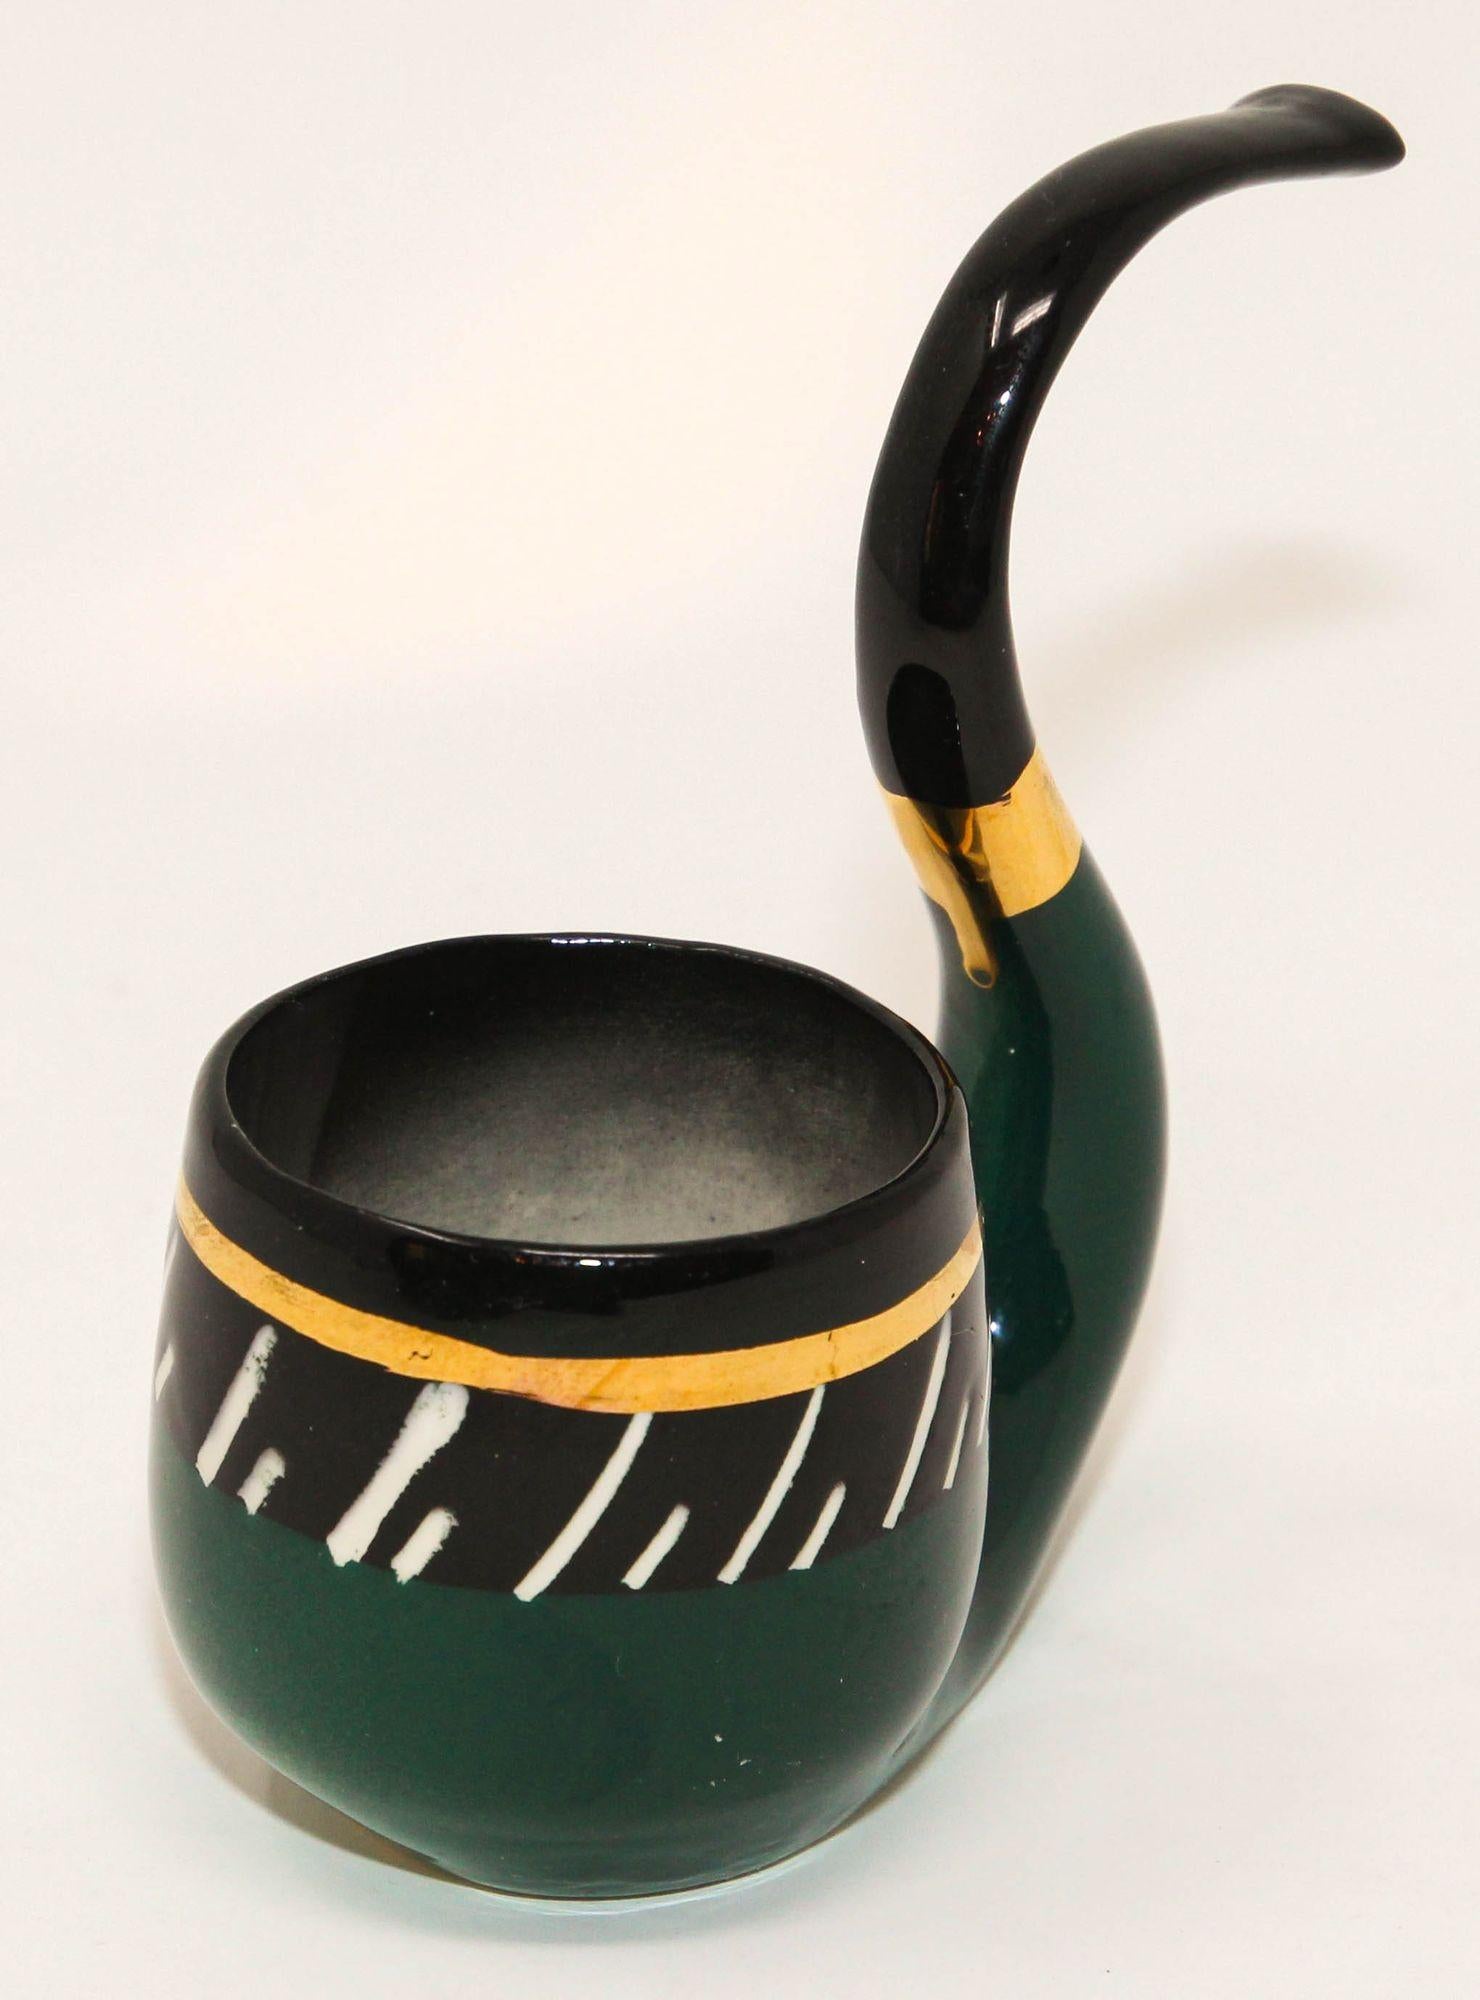 Sascha Brastoff Art Studio Ceramic midcentury Art Pottery, Circa 1950s.
Vintage Mid-Century Modern Sascha Bradstoff Ceramic ashtray or cigarette holder in the shape of a pipe.
Sascha Brastoff unusual black, green and gold ceramic